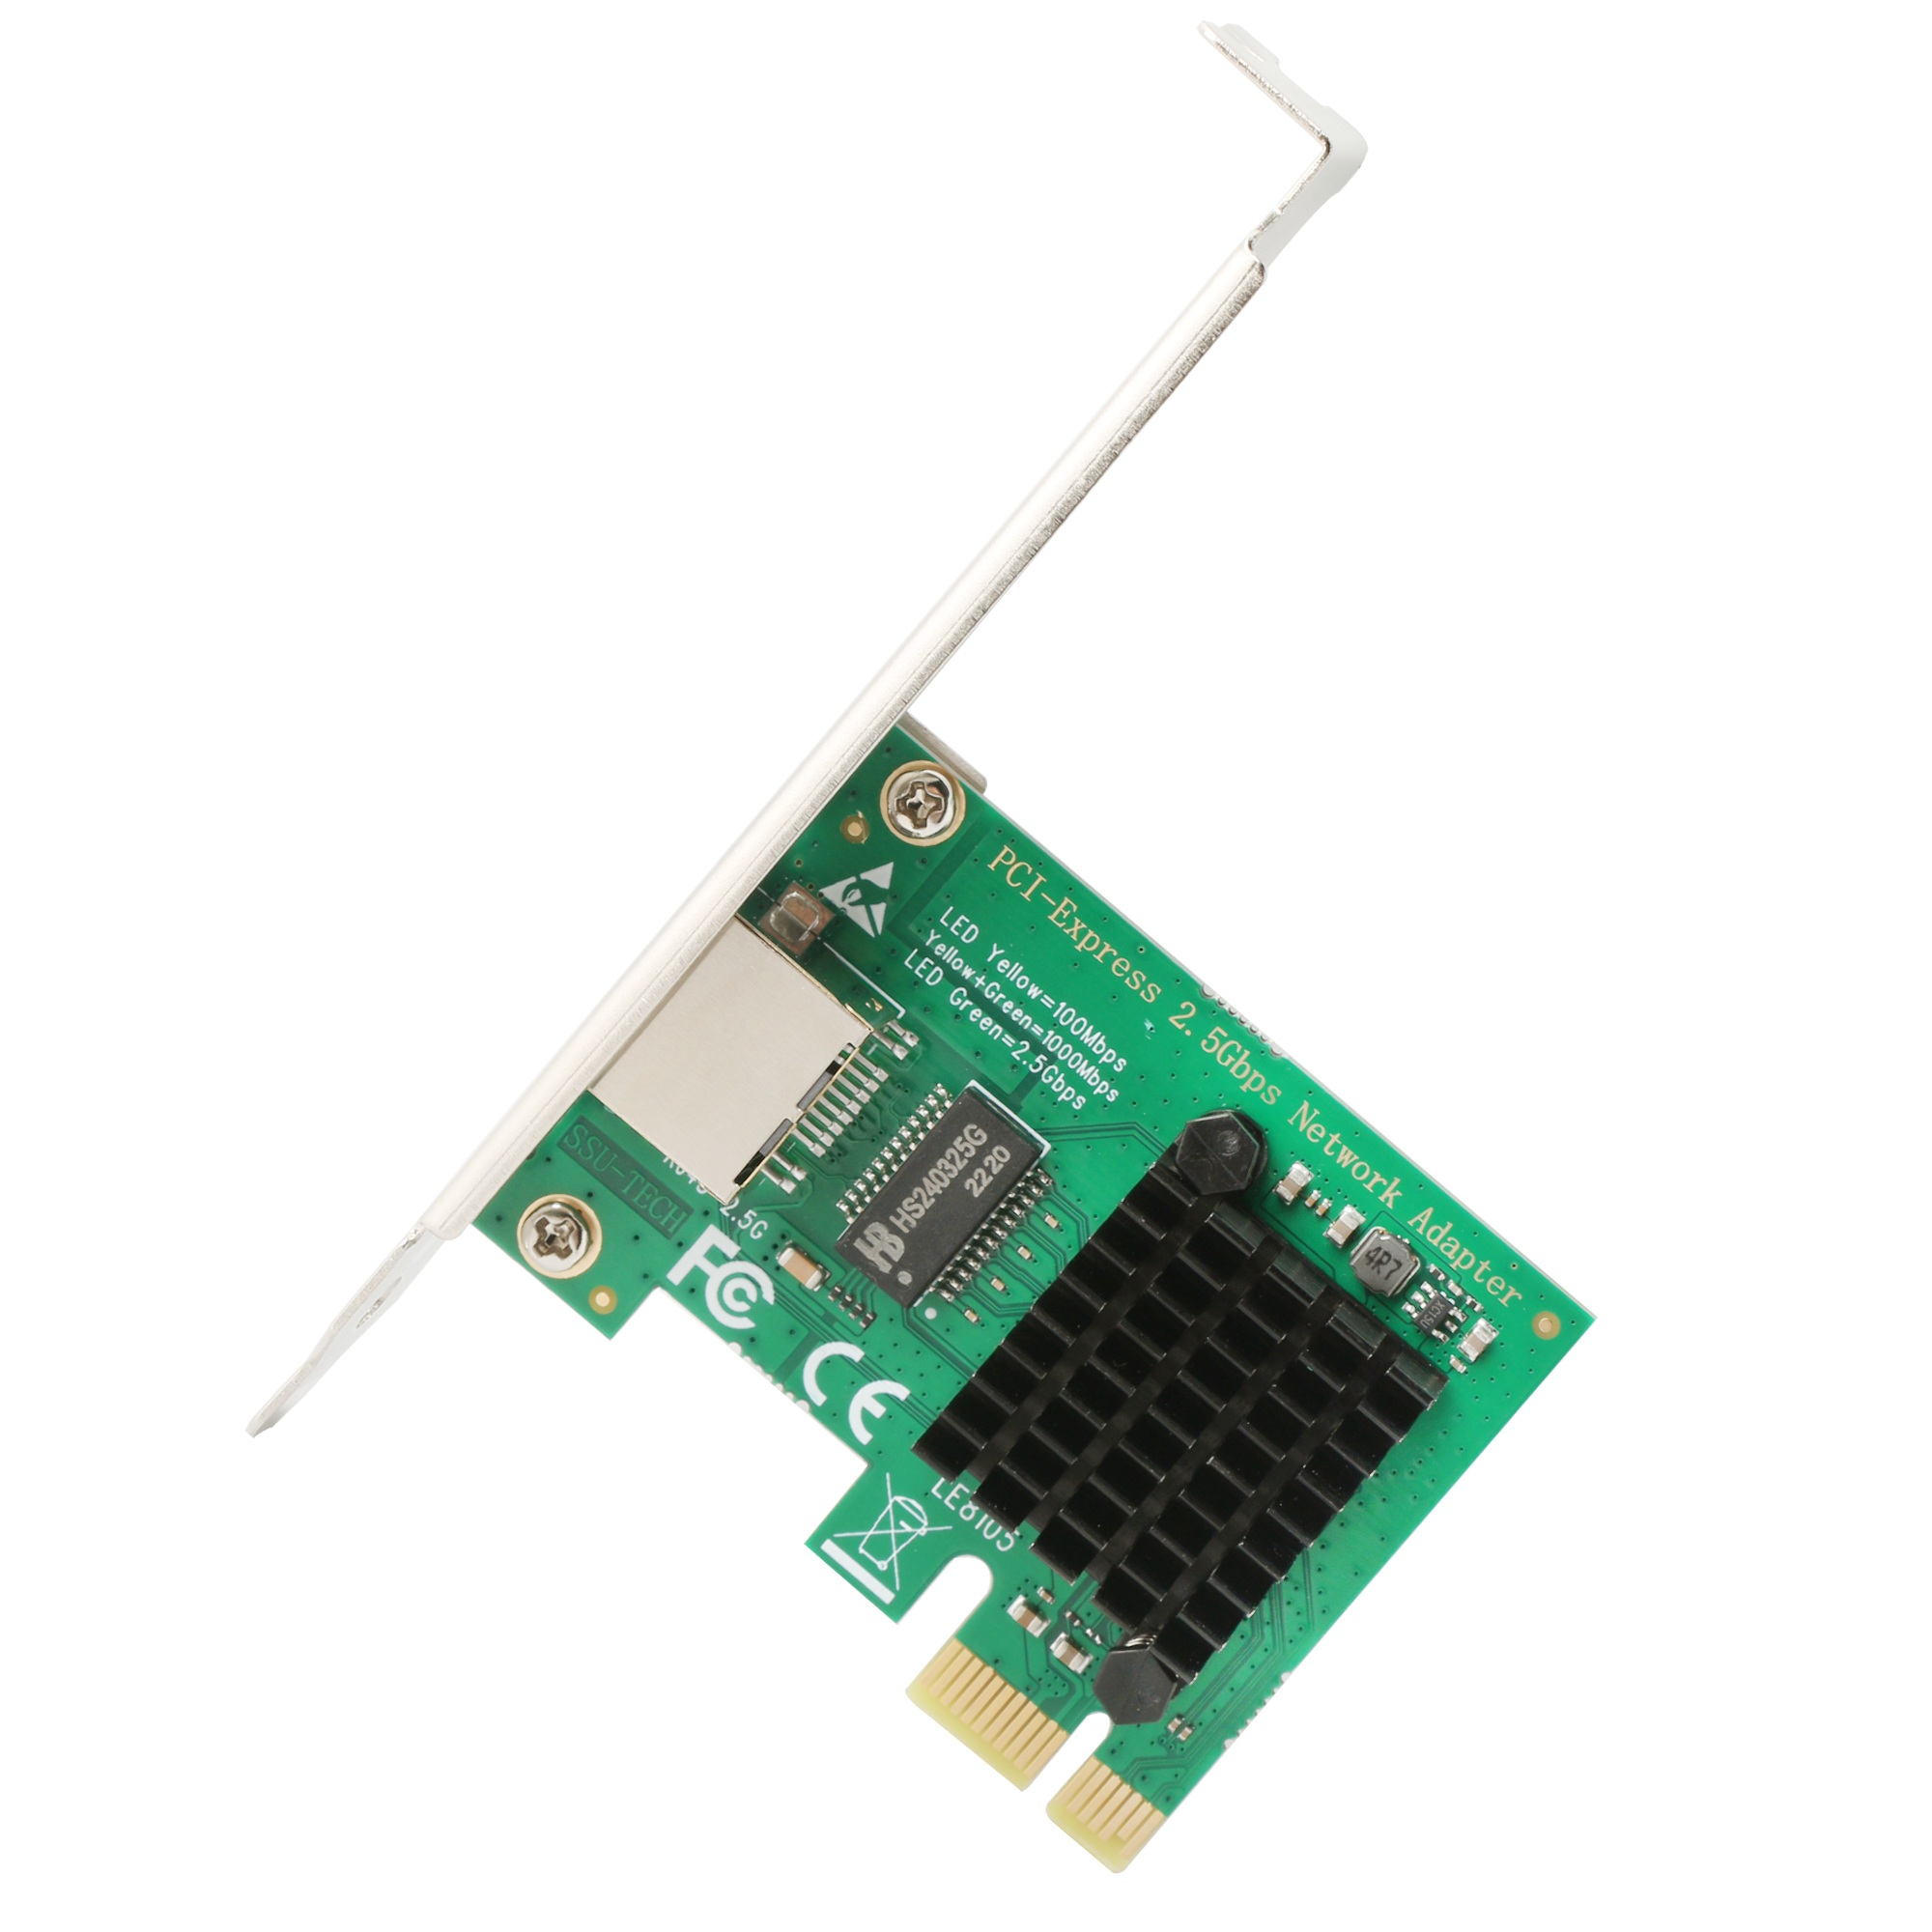 Ziyituod 2.5G Base-T Ethernet PCIe Network Card,RTL8125B 2.5G/1G/100Mbps